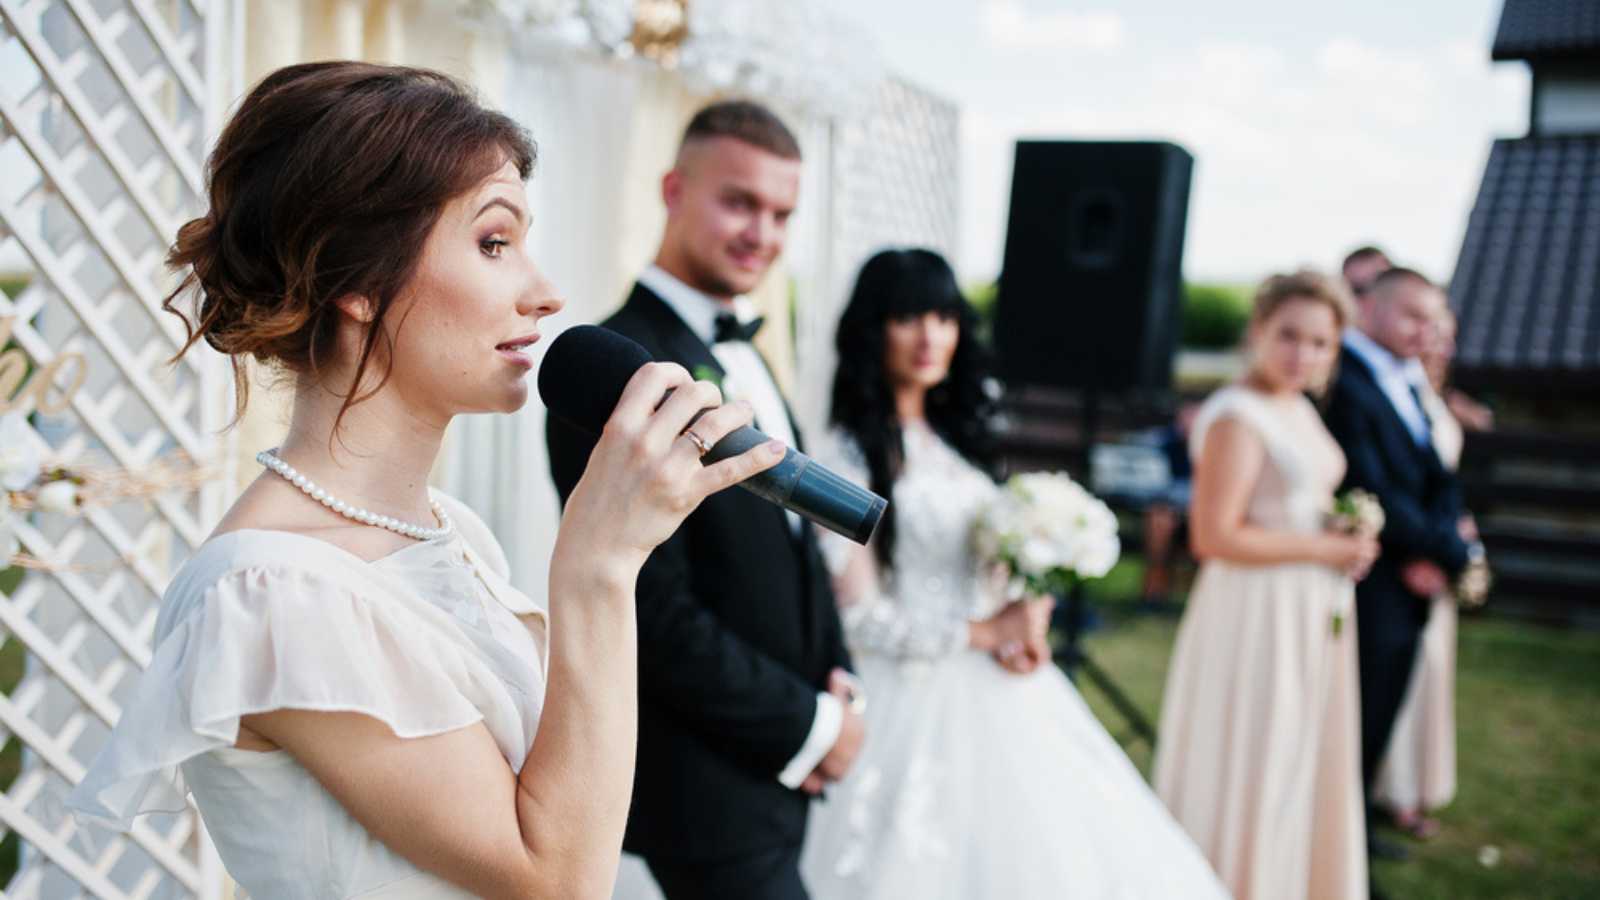 Bridesmaid giving speech in wedding